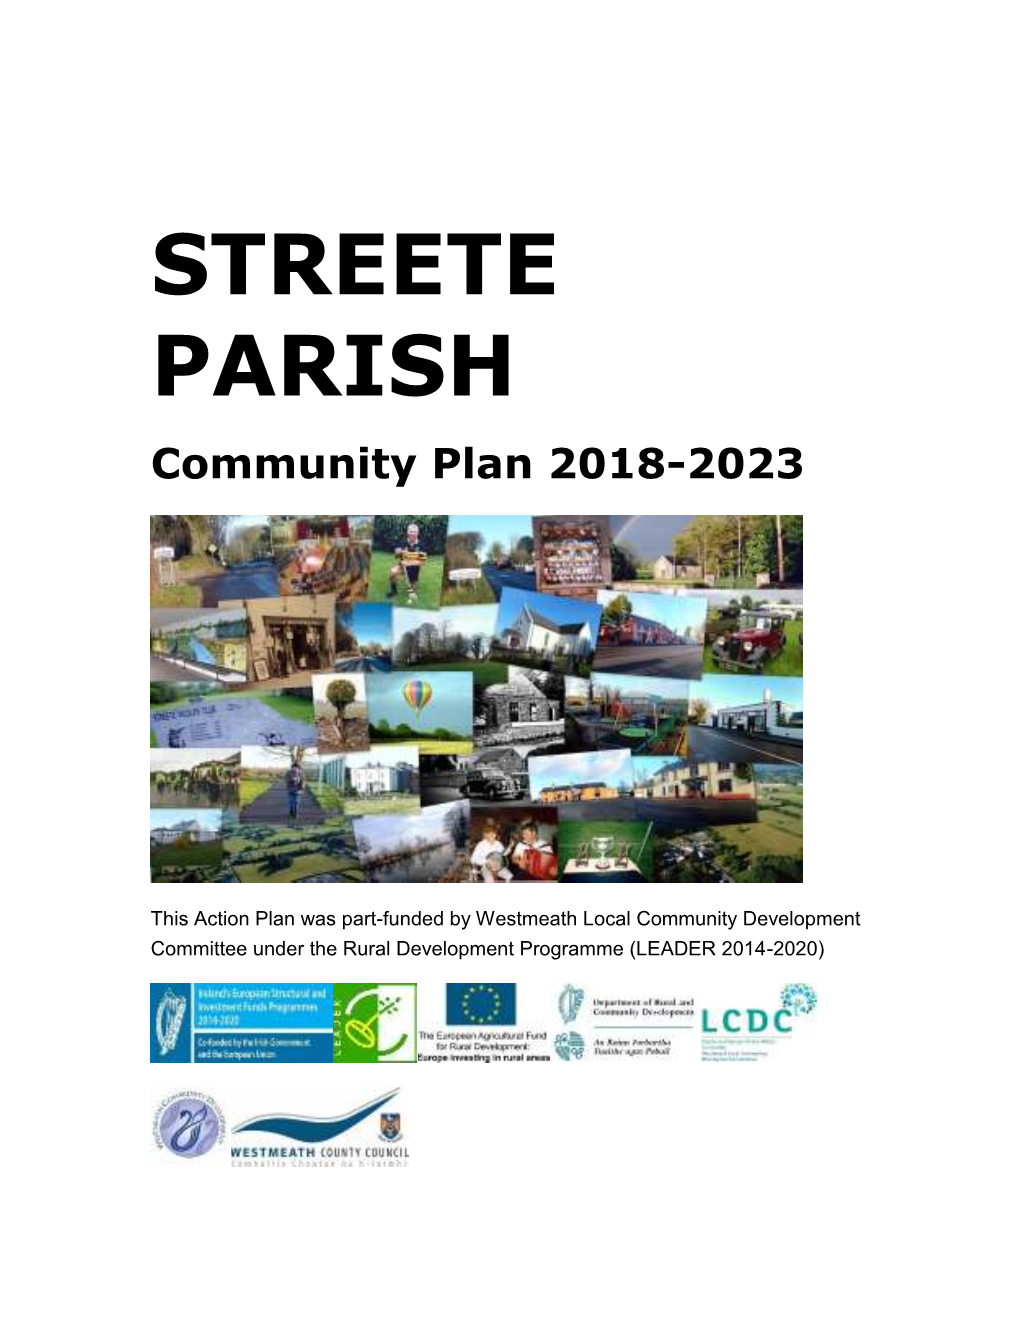 STREETE PARISH Community Plan 2018-2023